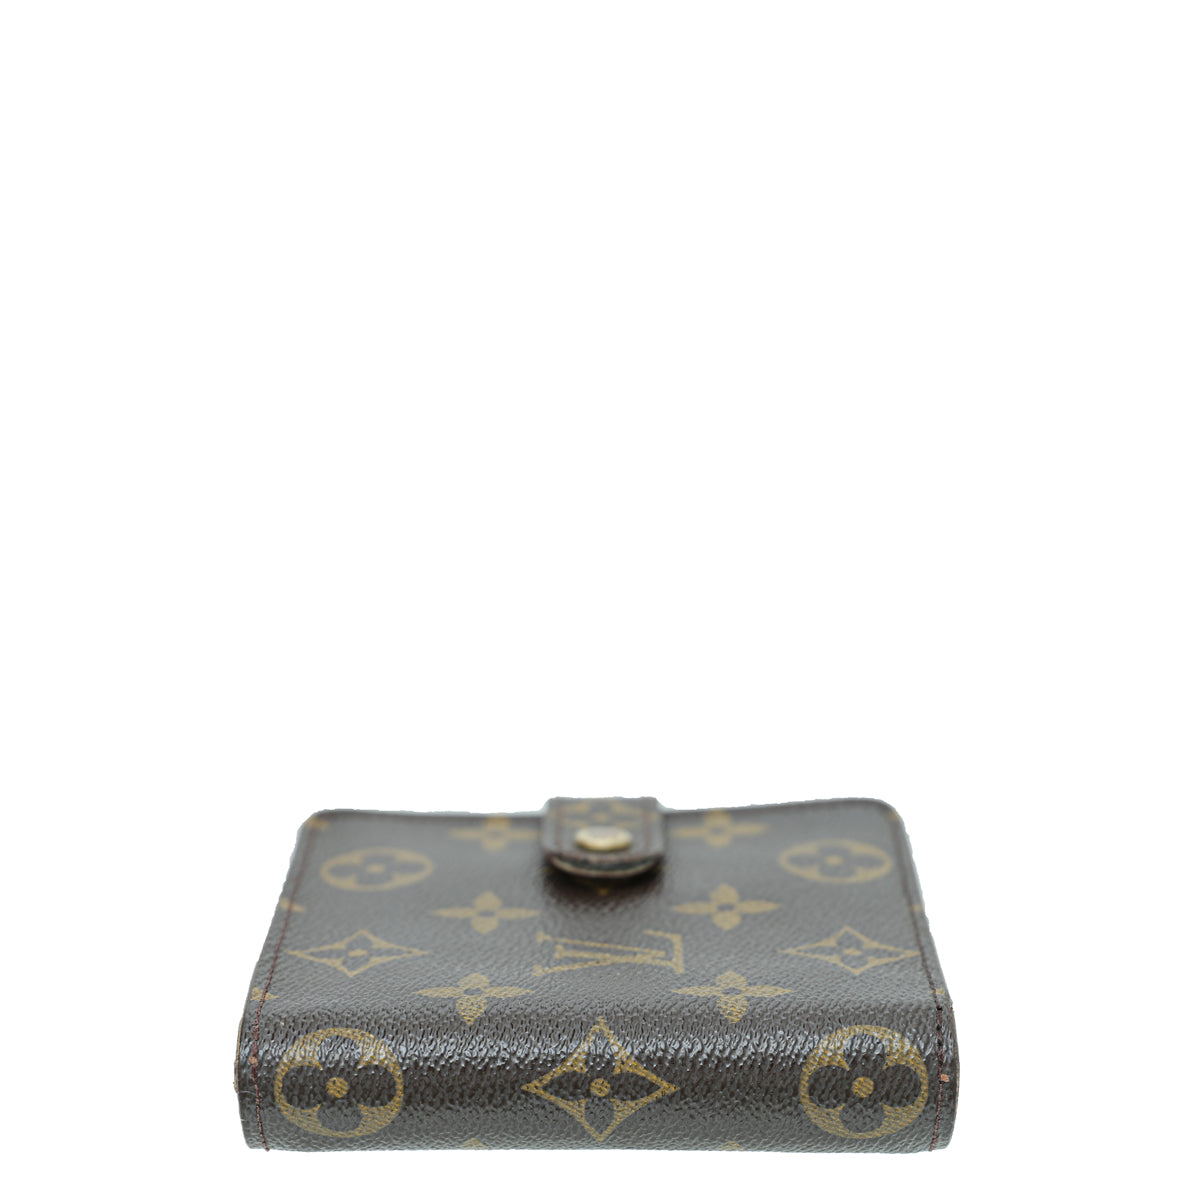 Date Code & Stamp] Louis Vuitton Monogram Square Zip Around Wallet